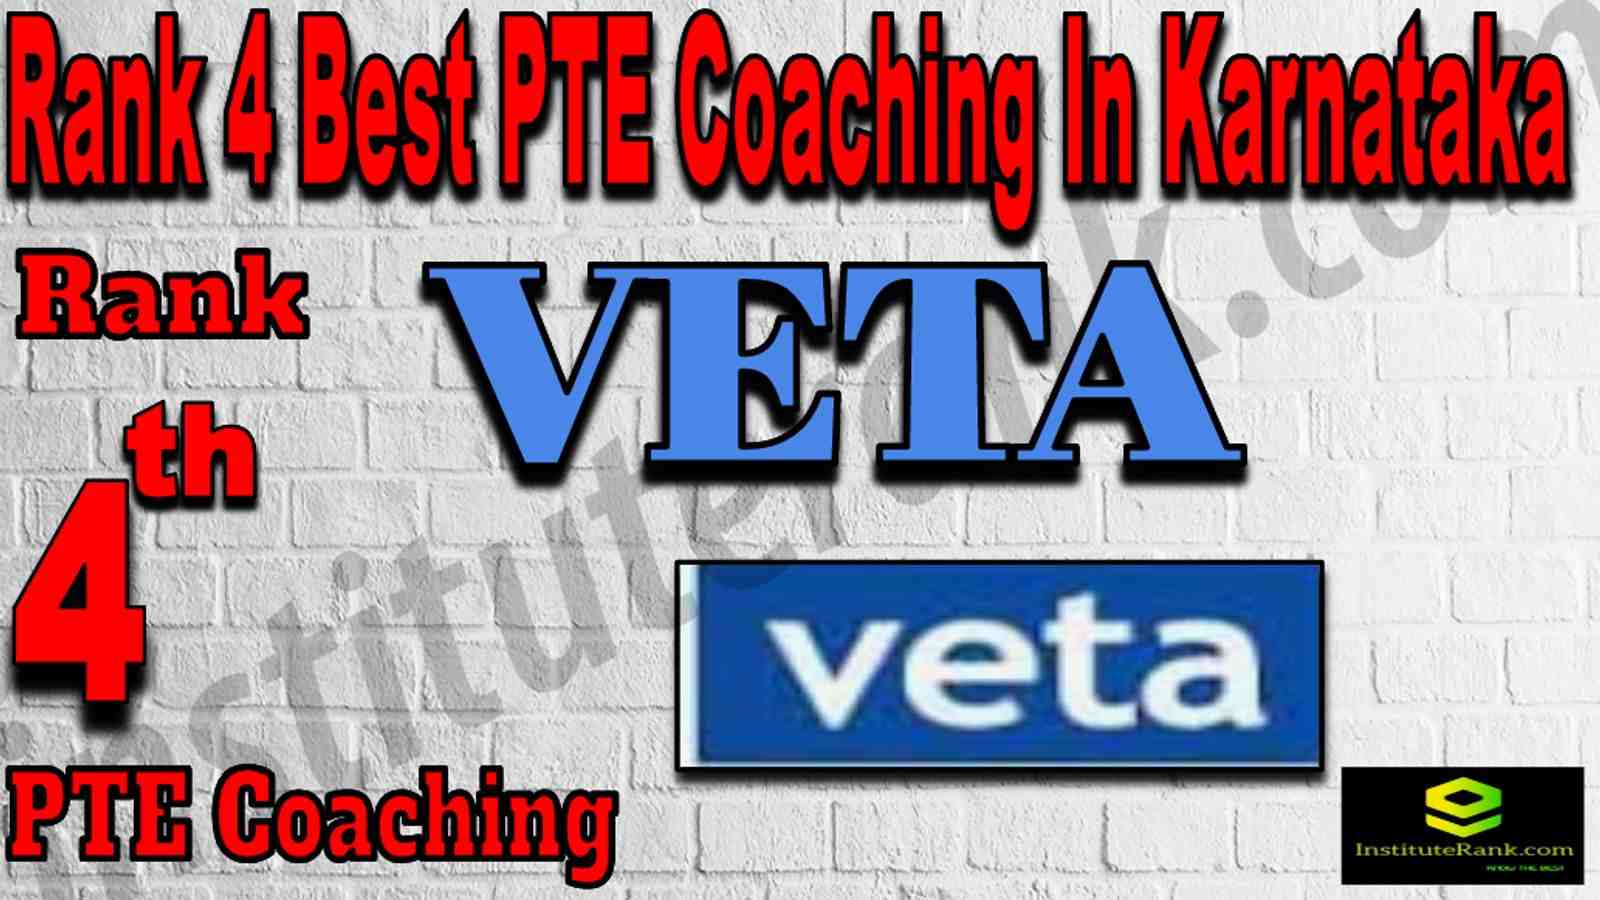 4th Best PTE Coaching In Karnataka